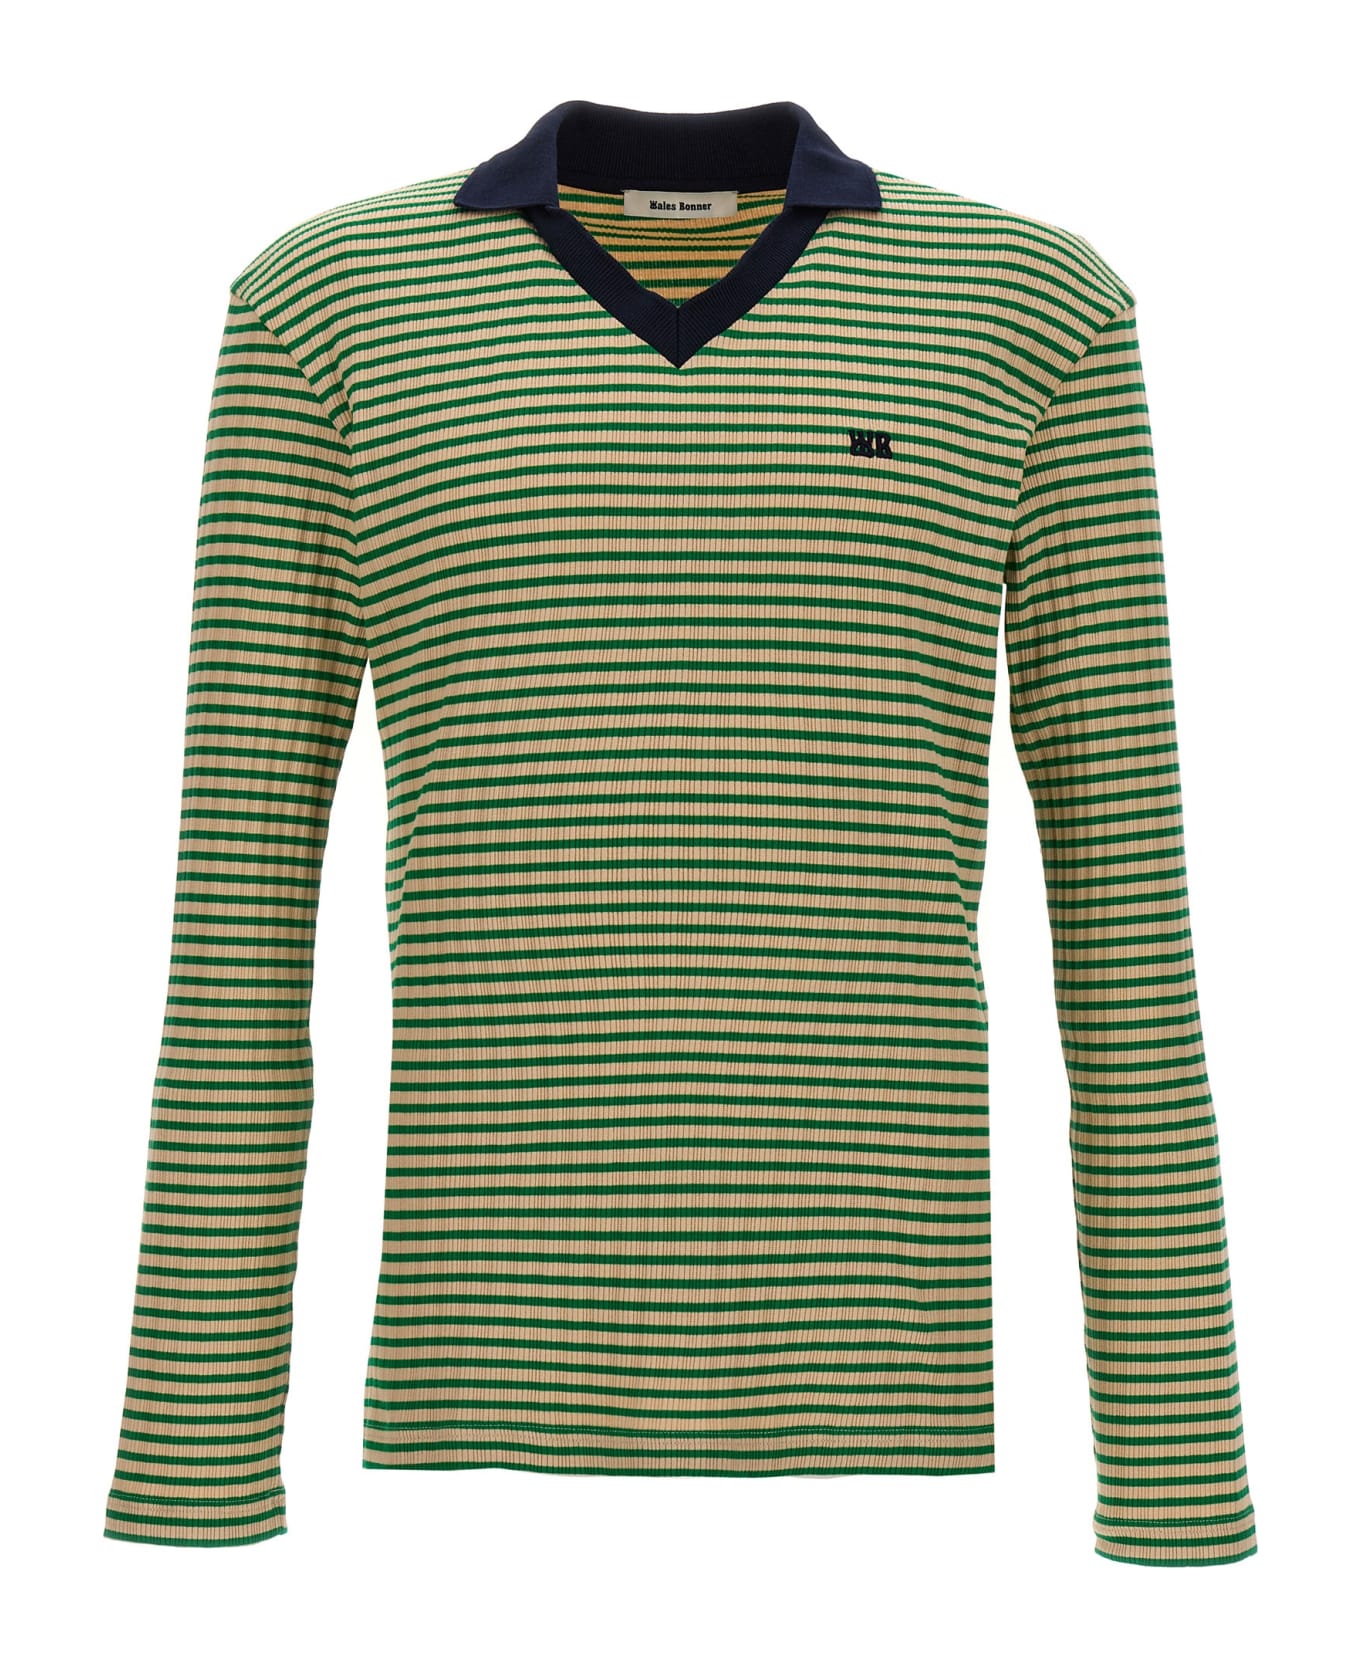 Wales Bonner 'sonic' Polo Shirt - GREEN